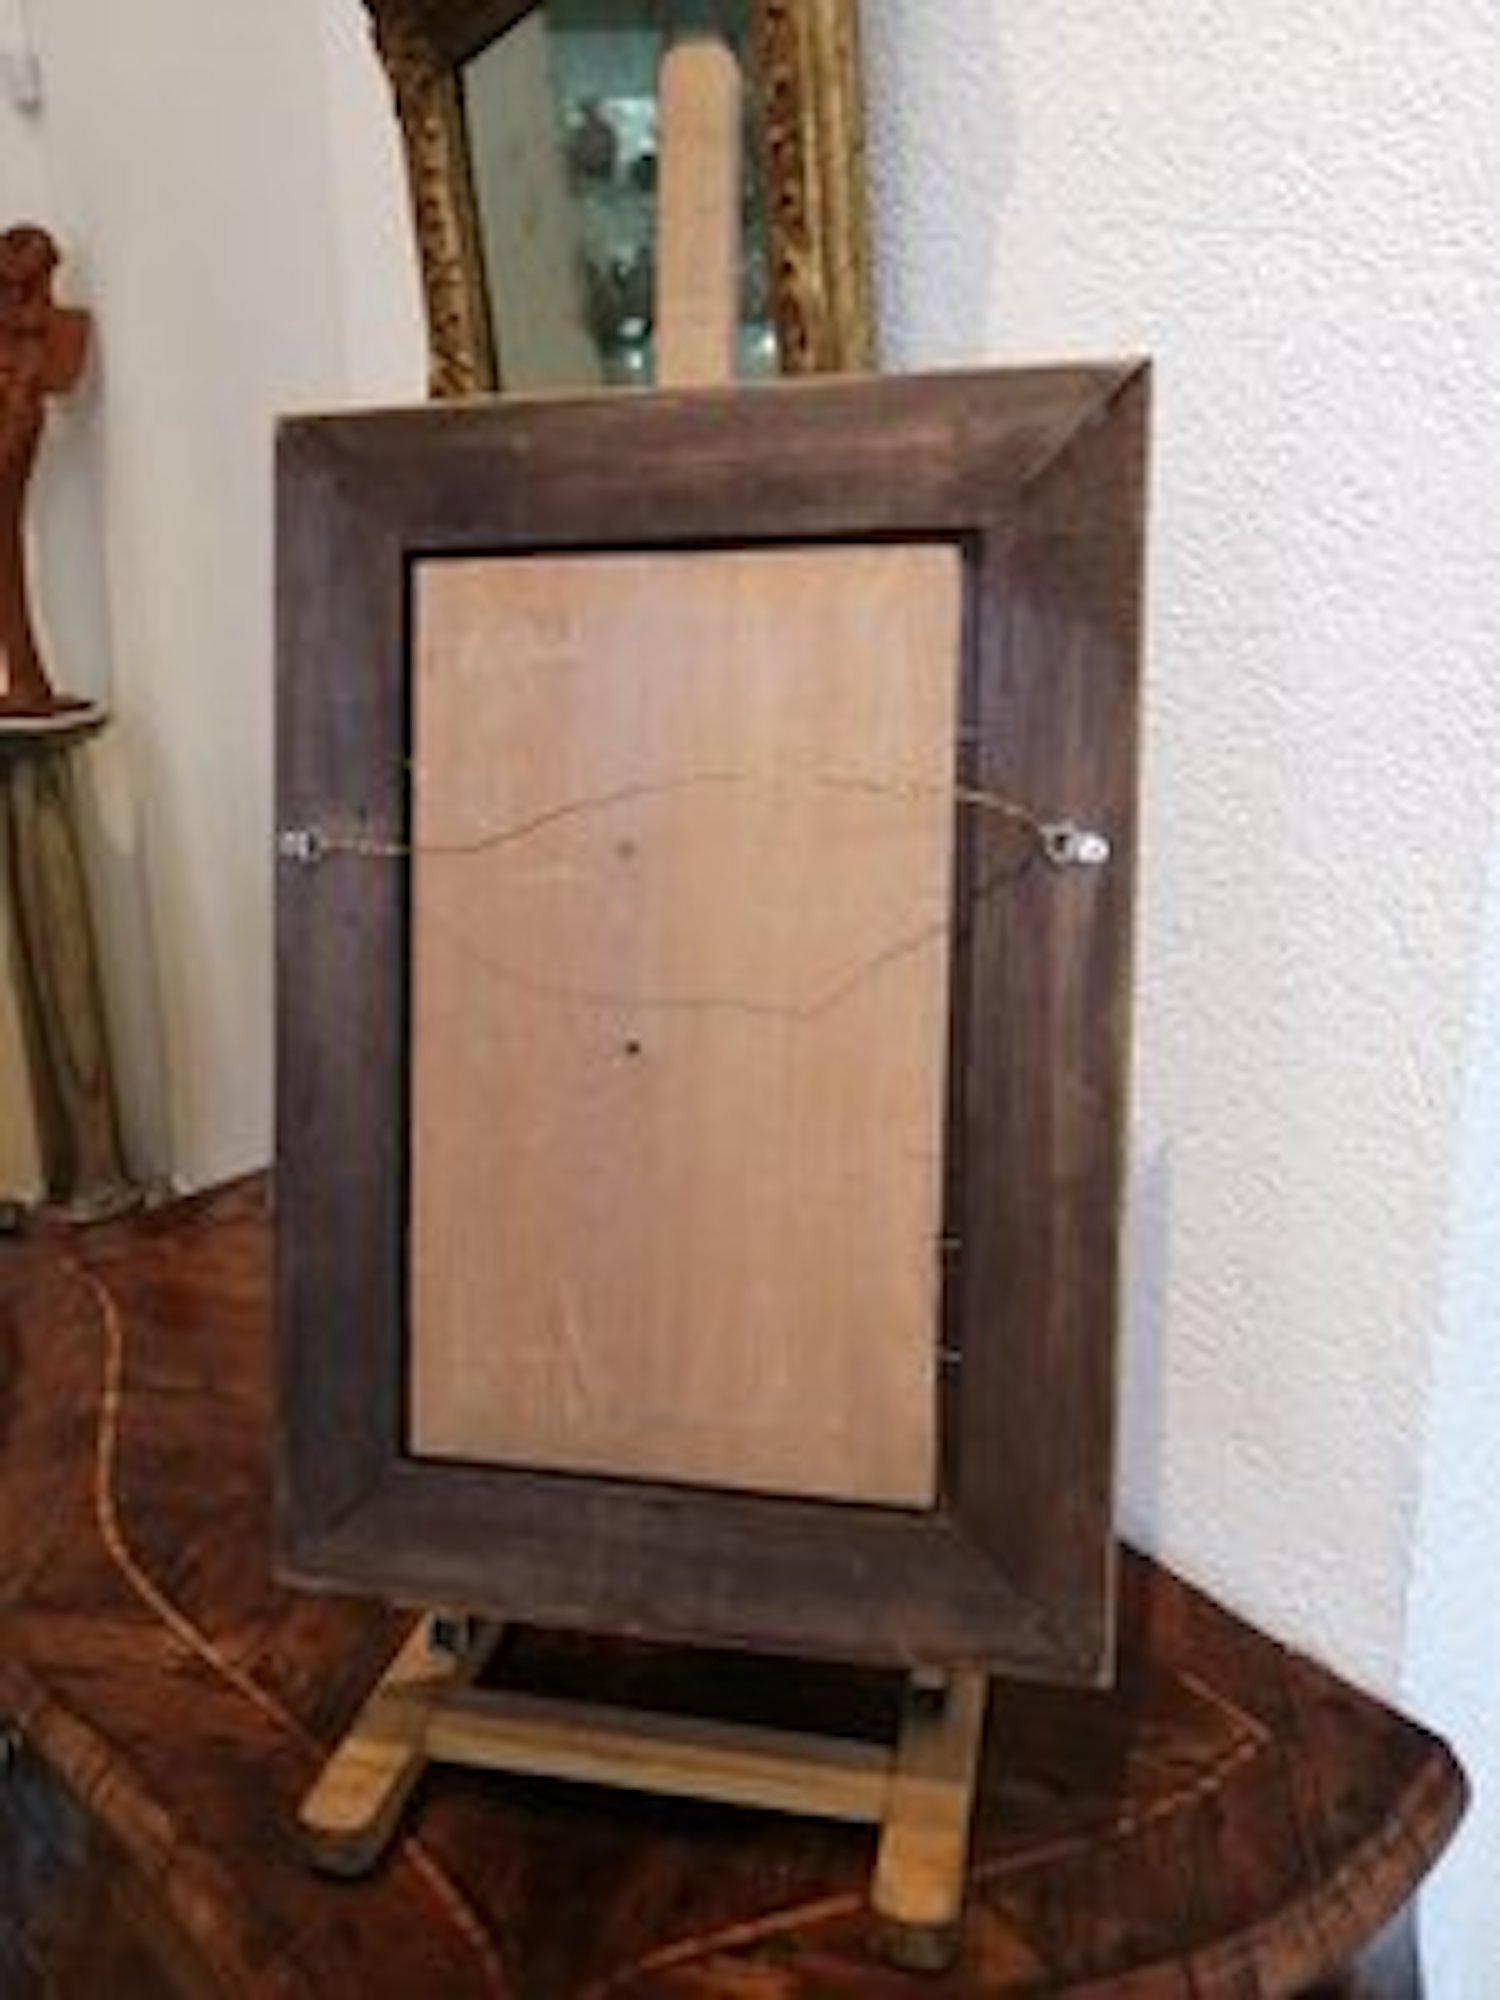 Work on wood
Golden wooden frame
51.5 x 37 x 3.5 cm